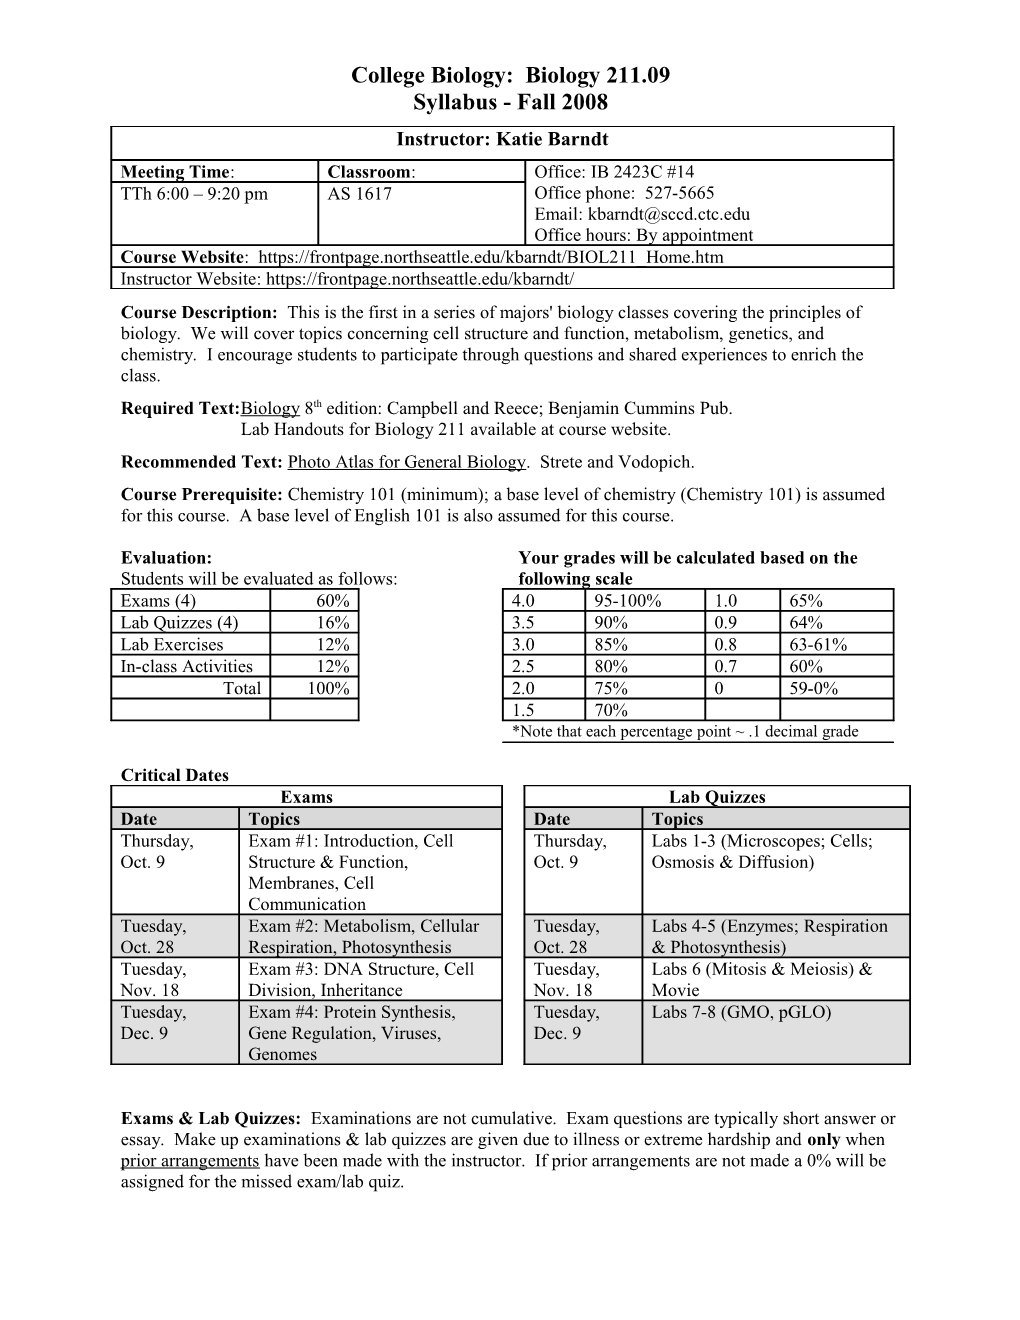 Biology 211 Schedule Fall 2008